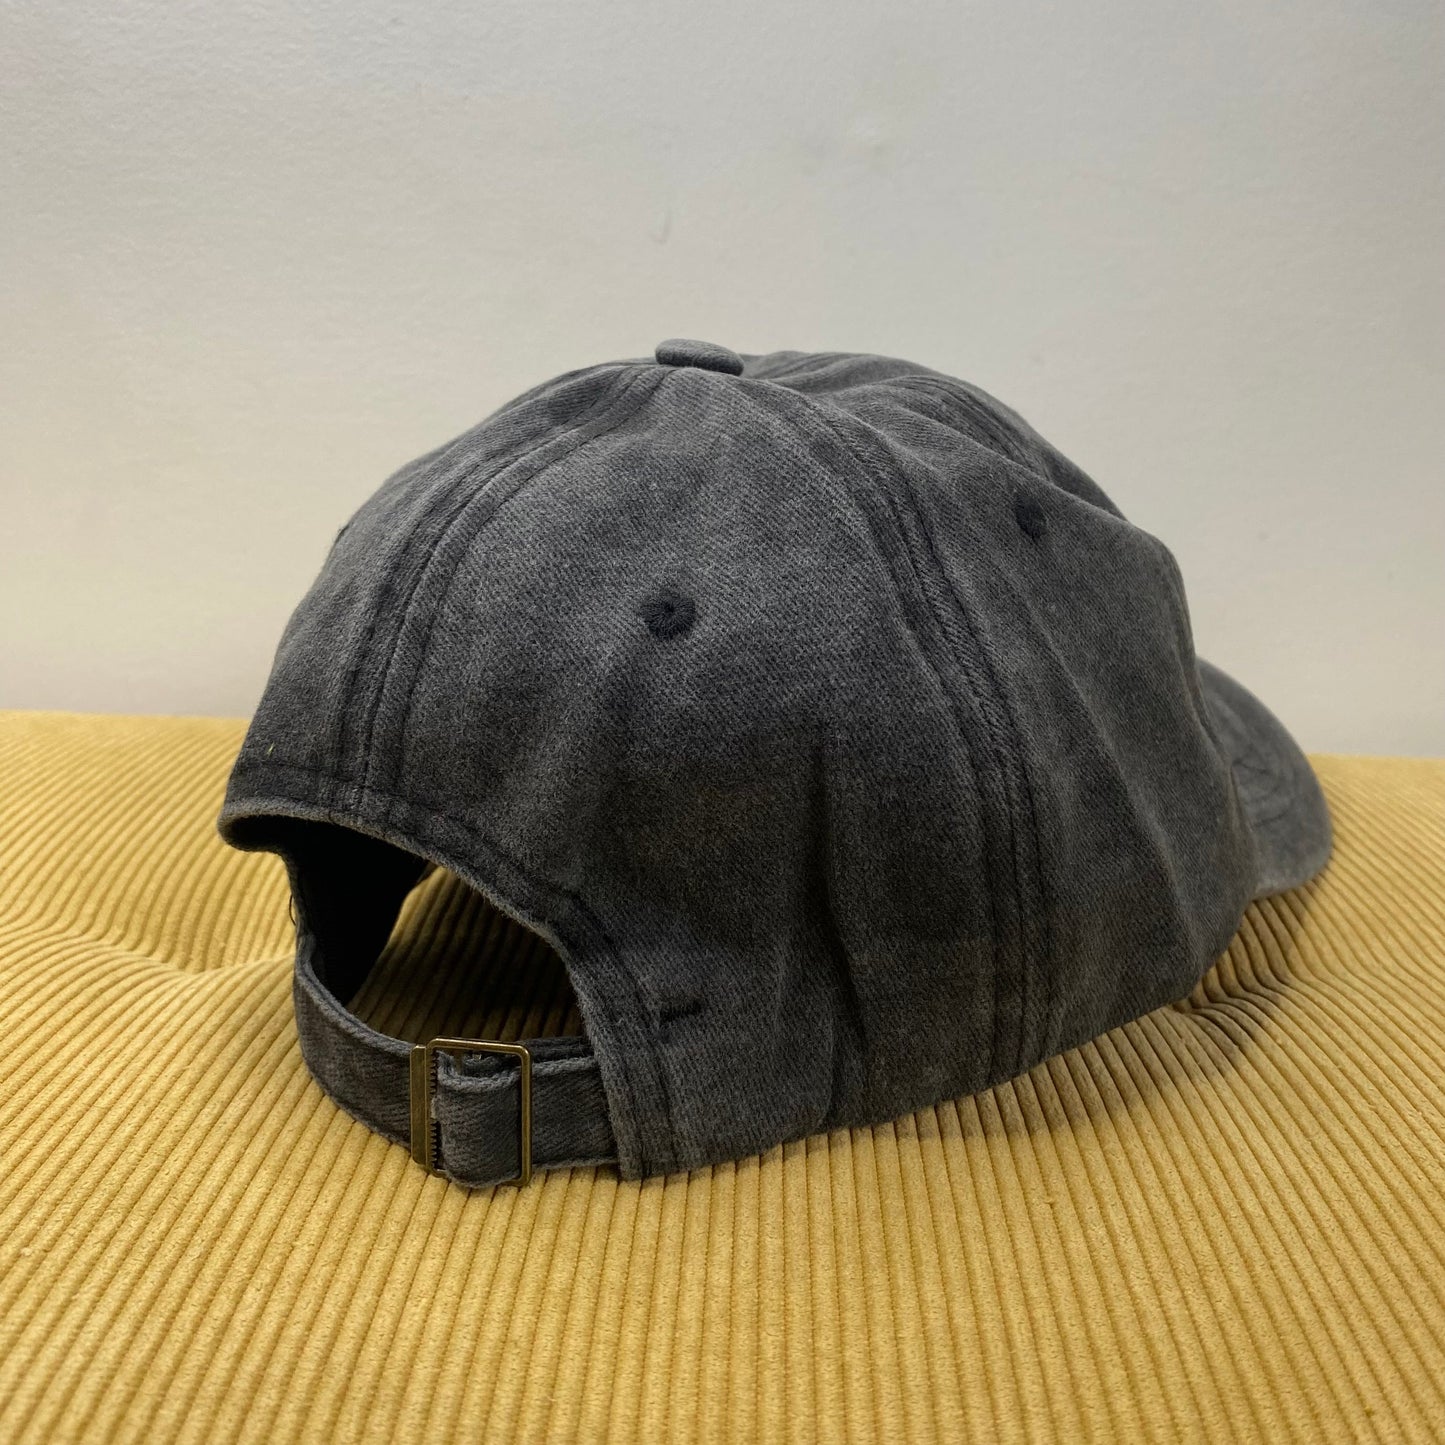 Hat - Charcoal/Black